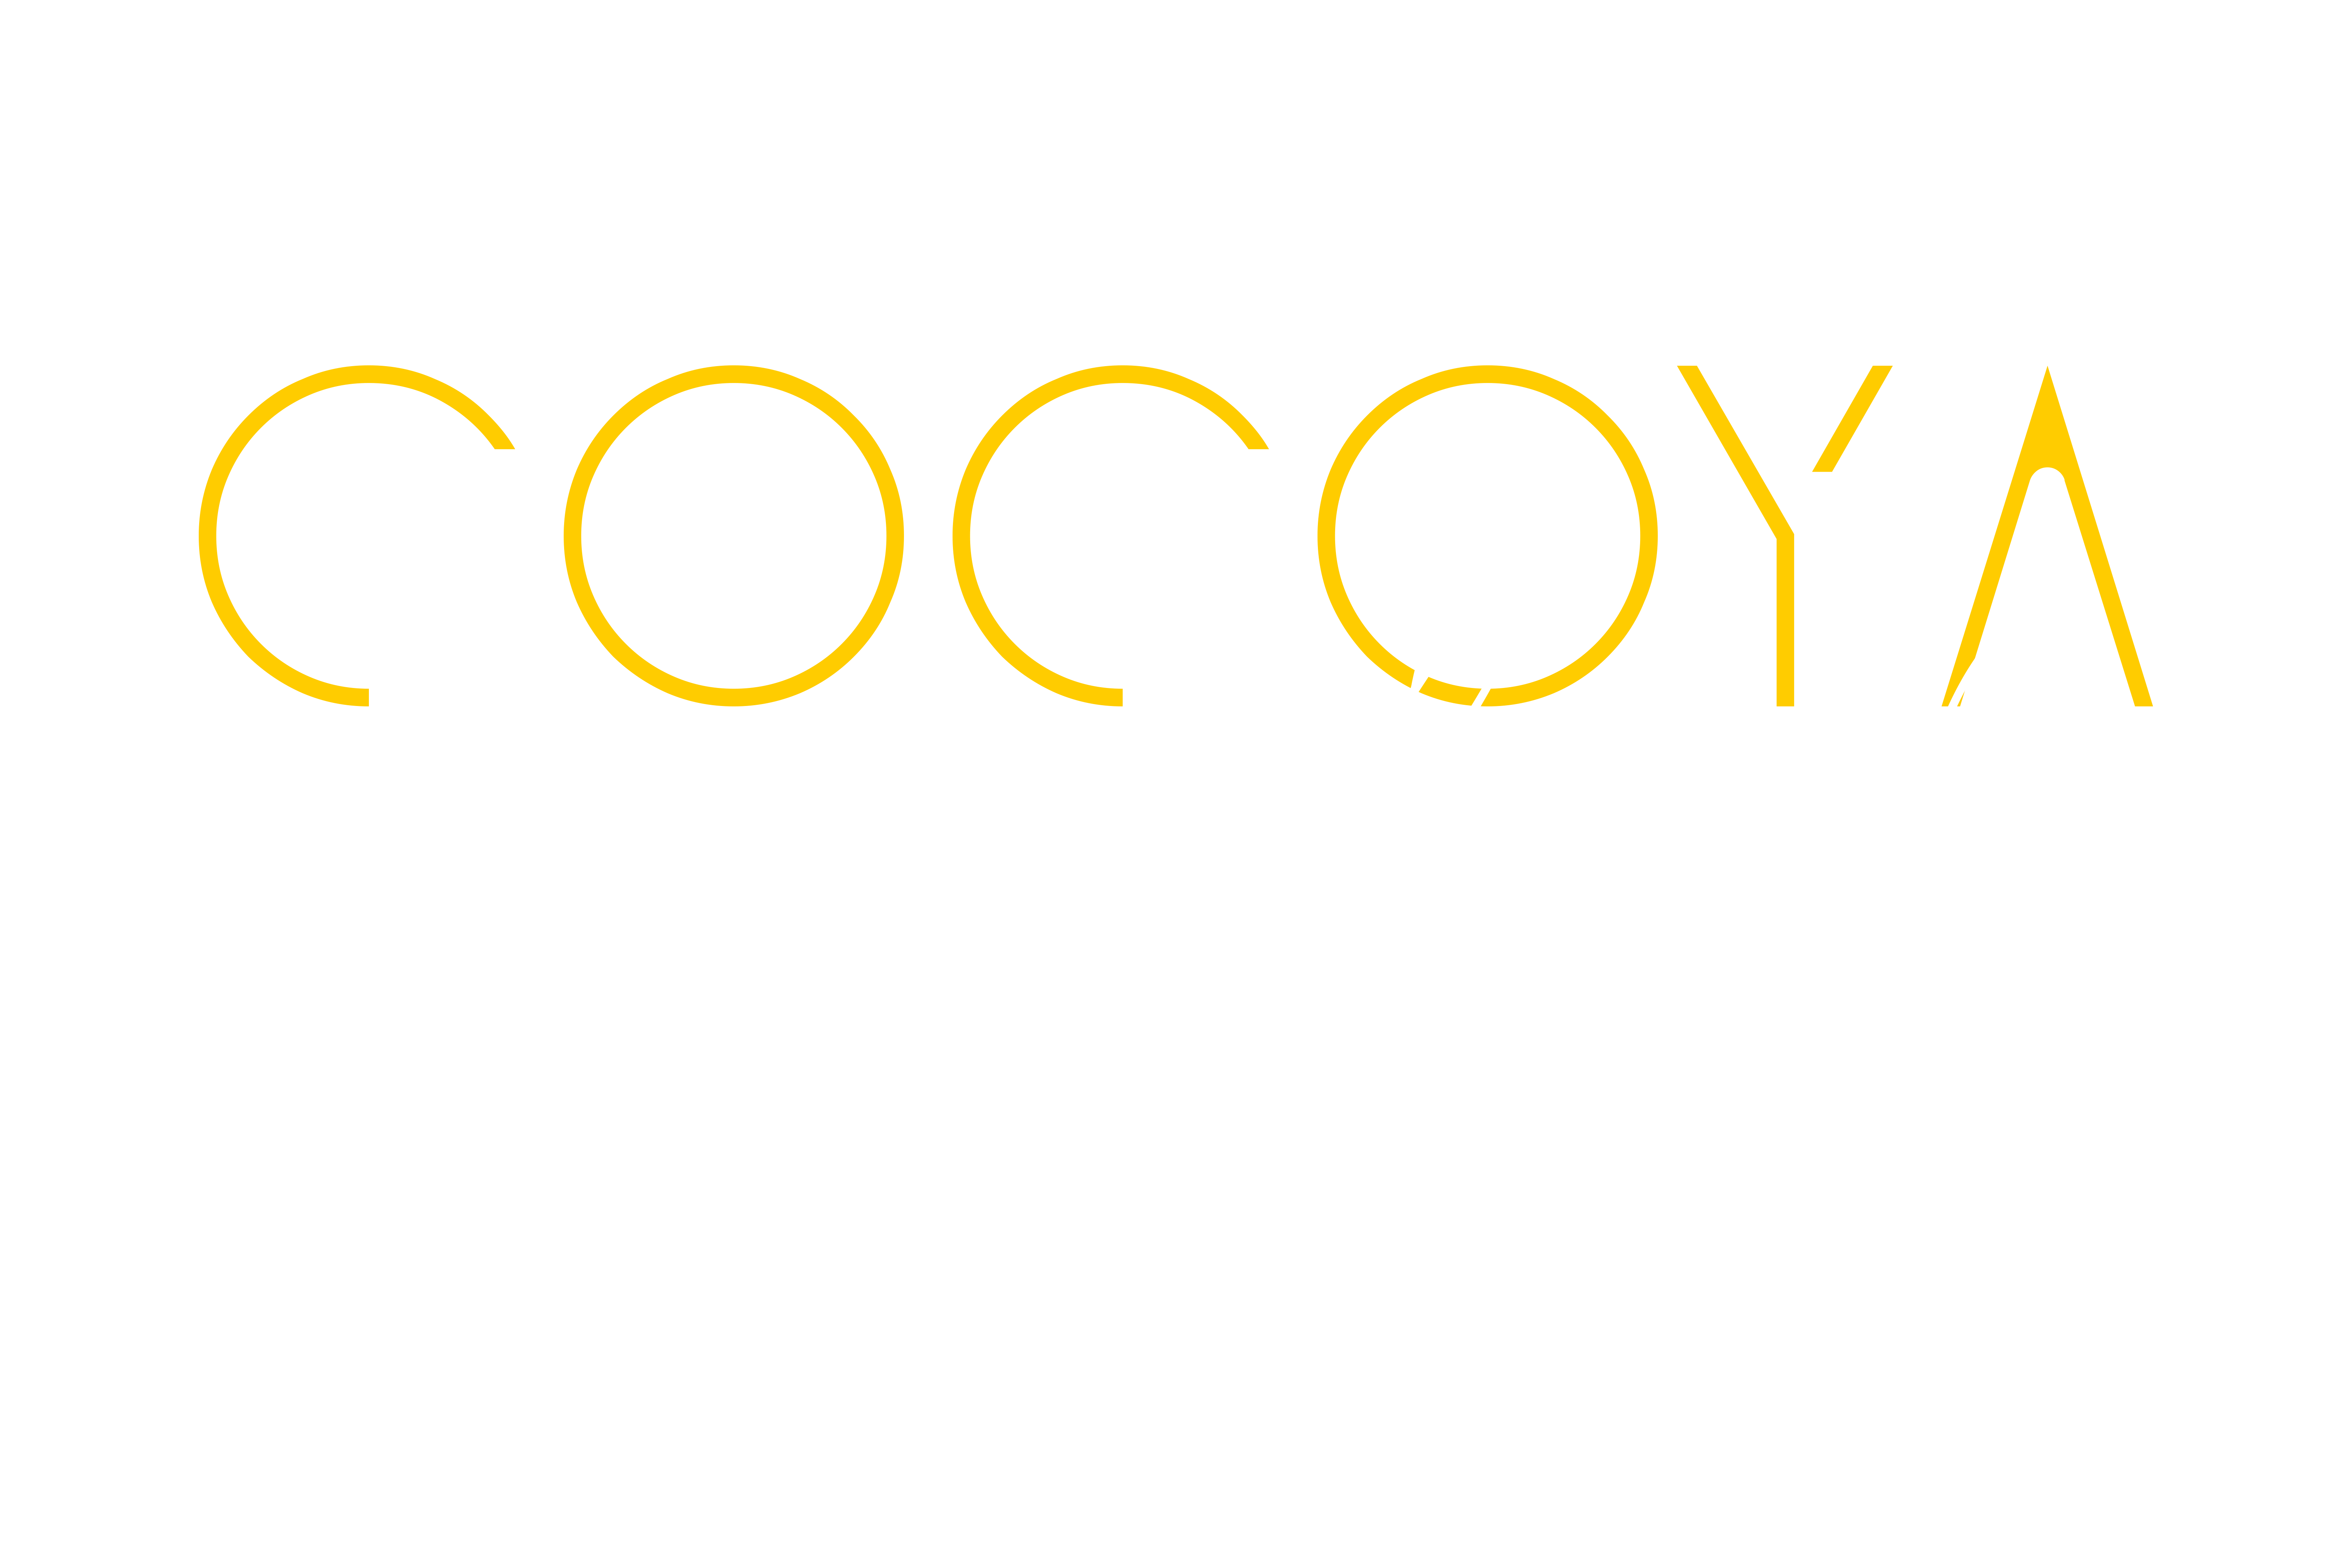 CocoyaBeach